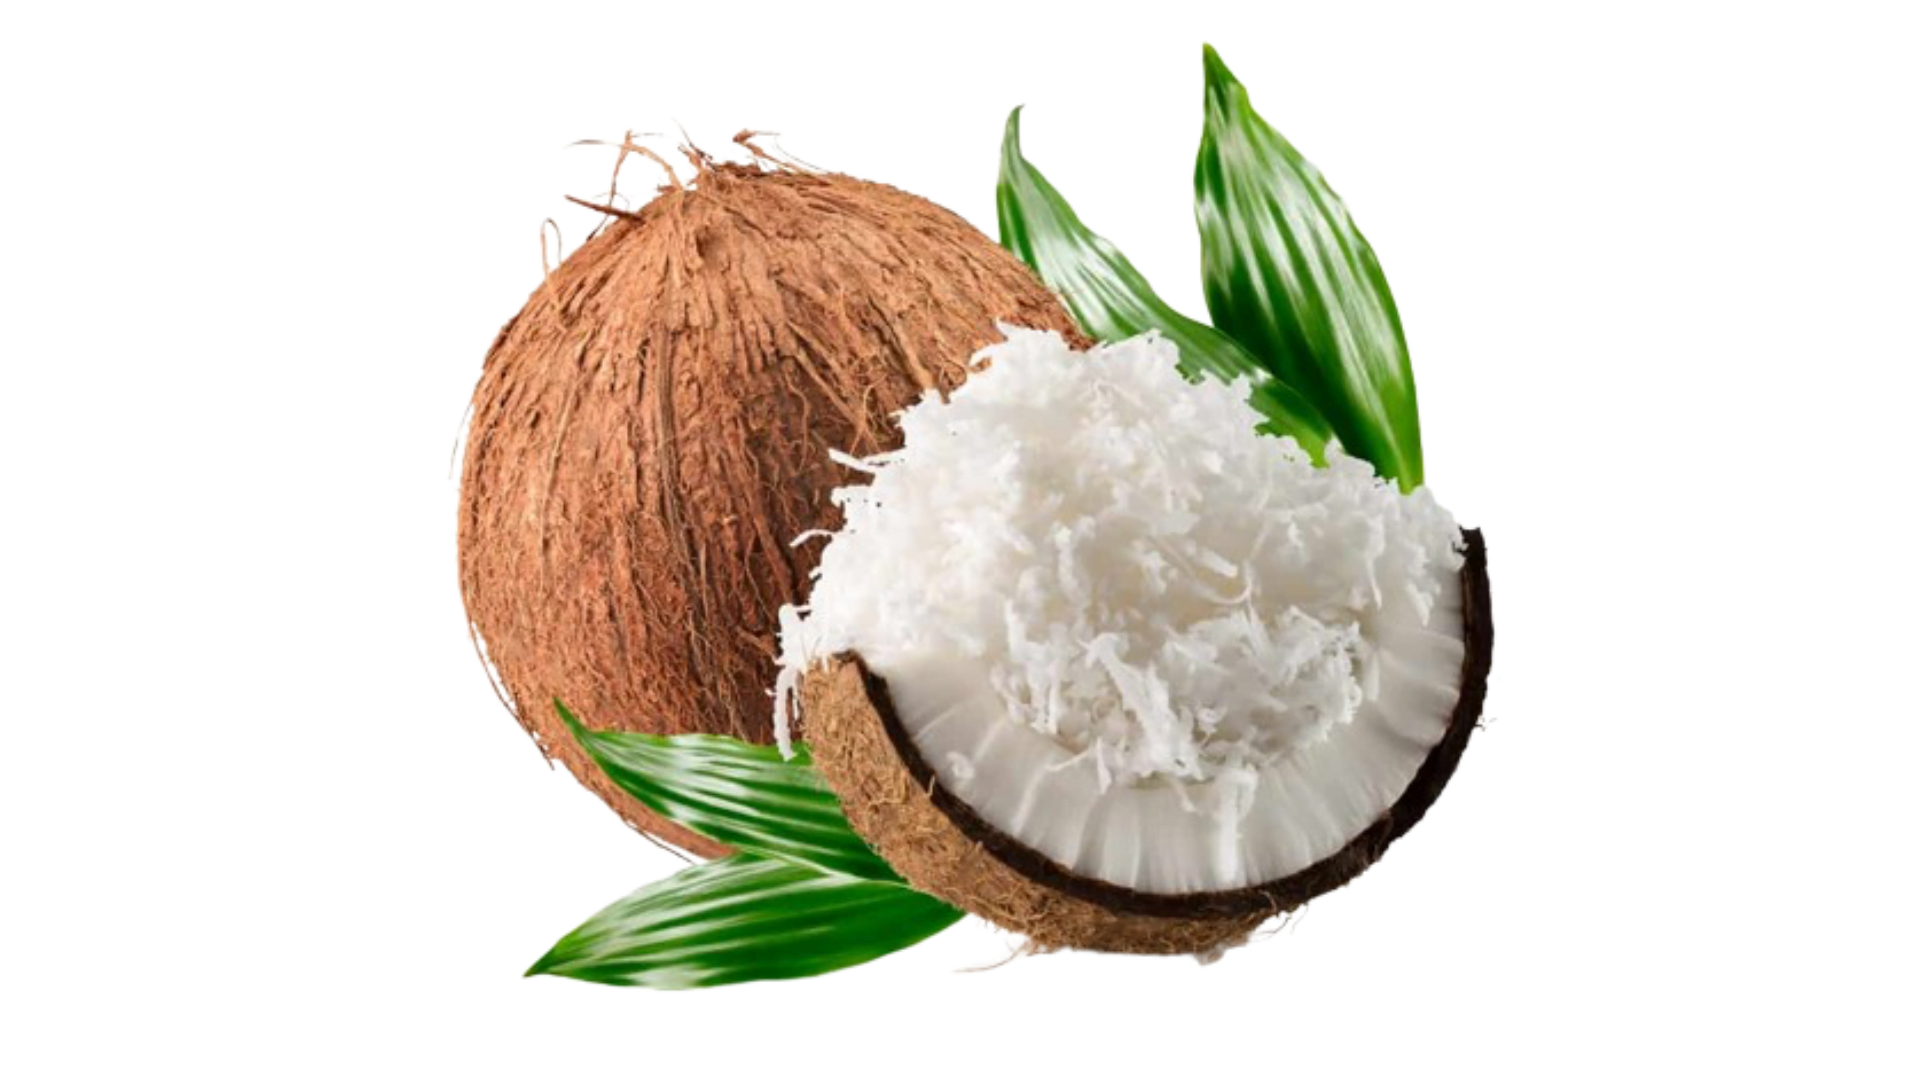 Coconut shavings